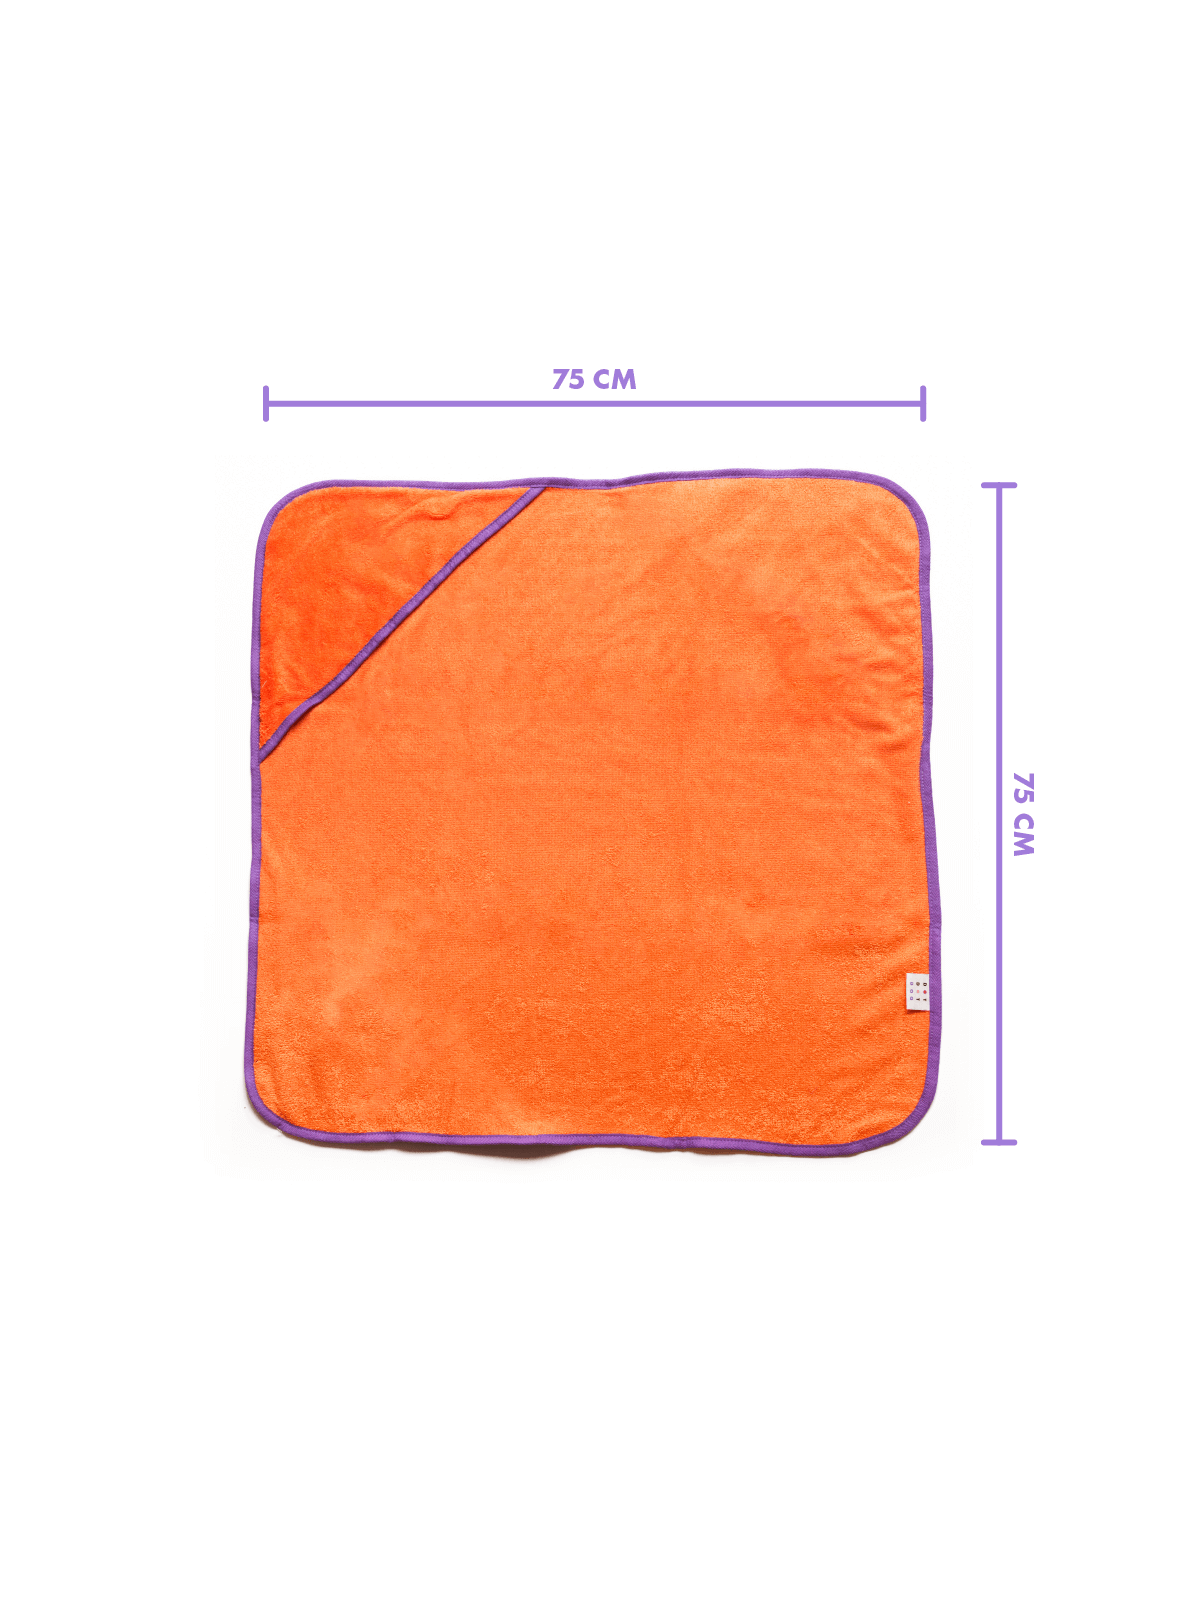 Dimensions of dog towel 75cm x 75cm